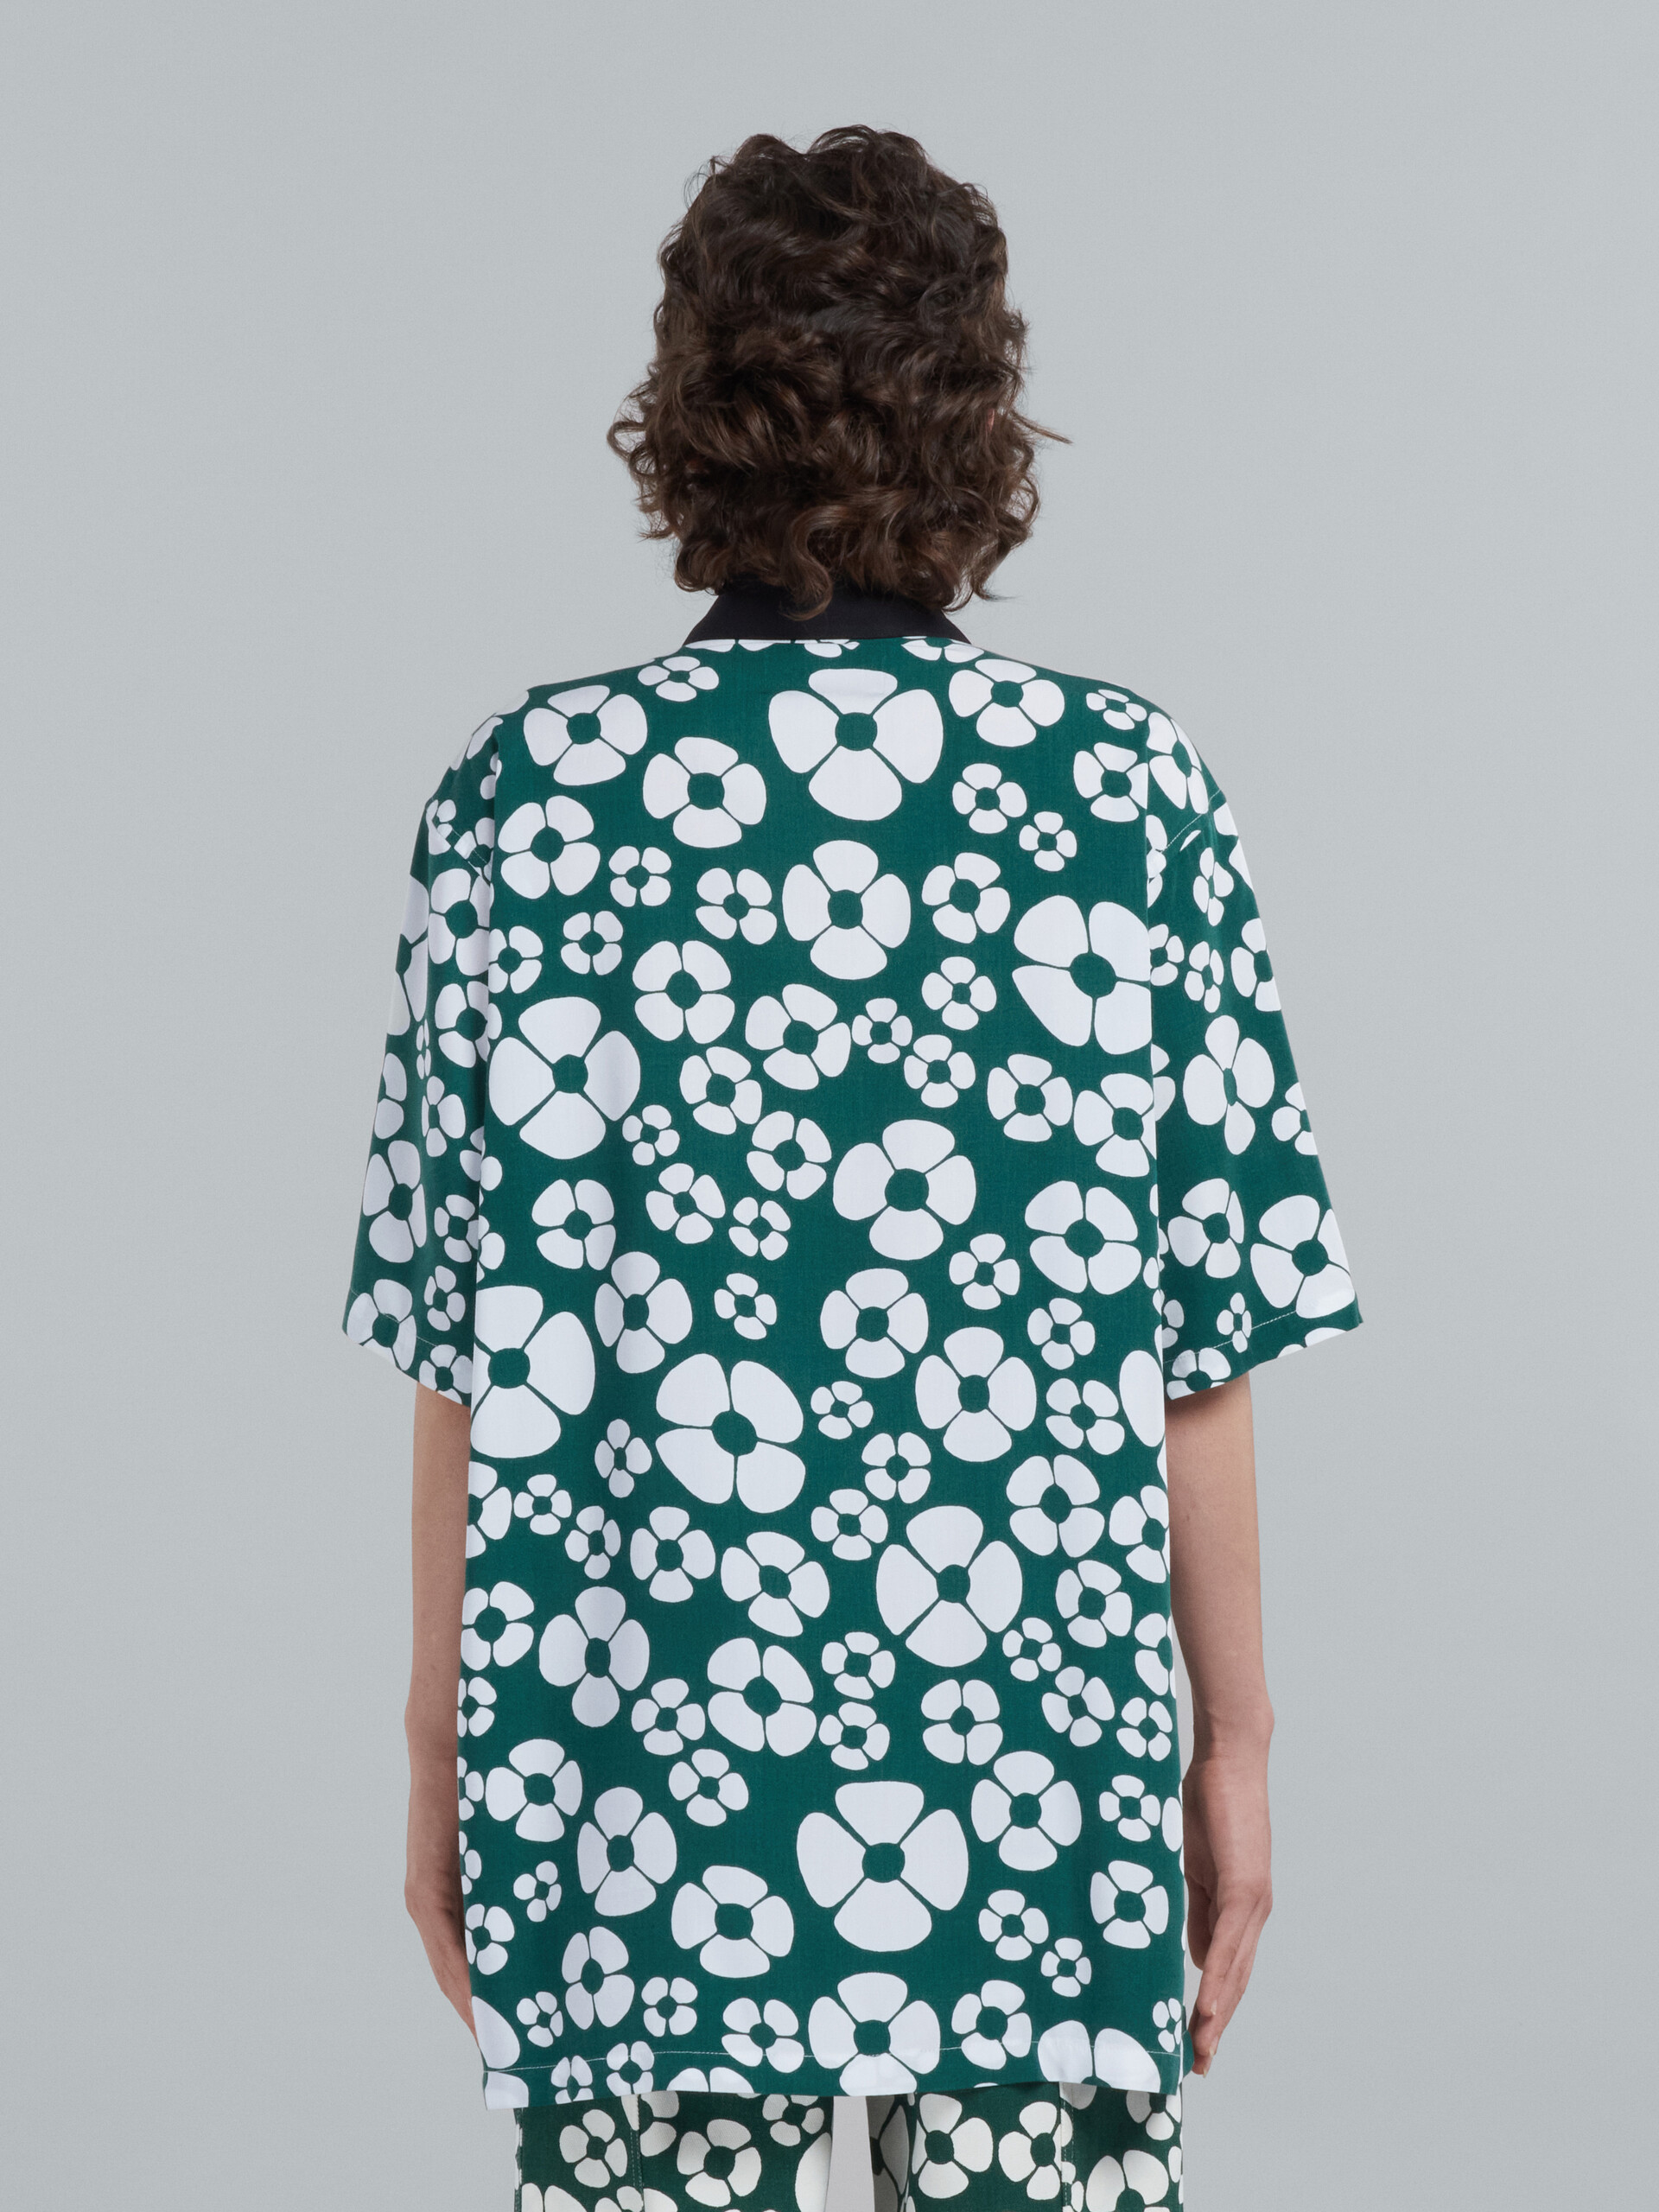 MARNI x CARHARTT WIP - Camiseta floral verde de manga corta - Camisas - Image 3